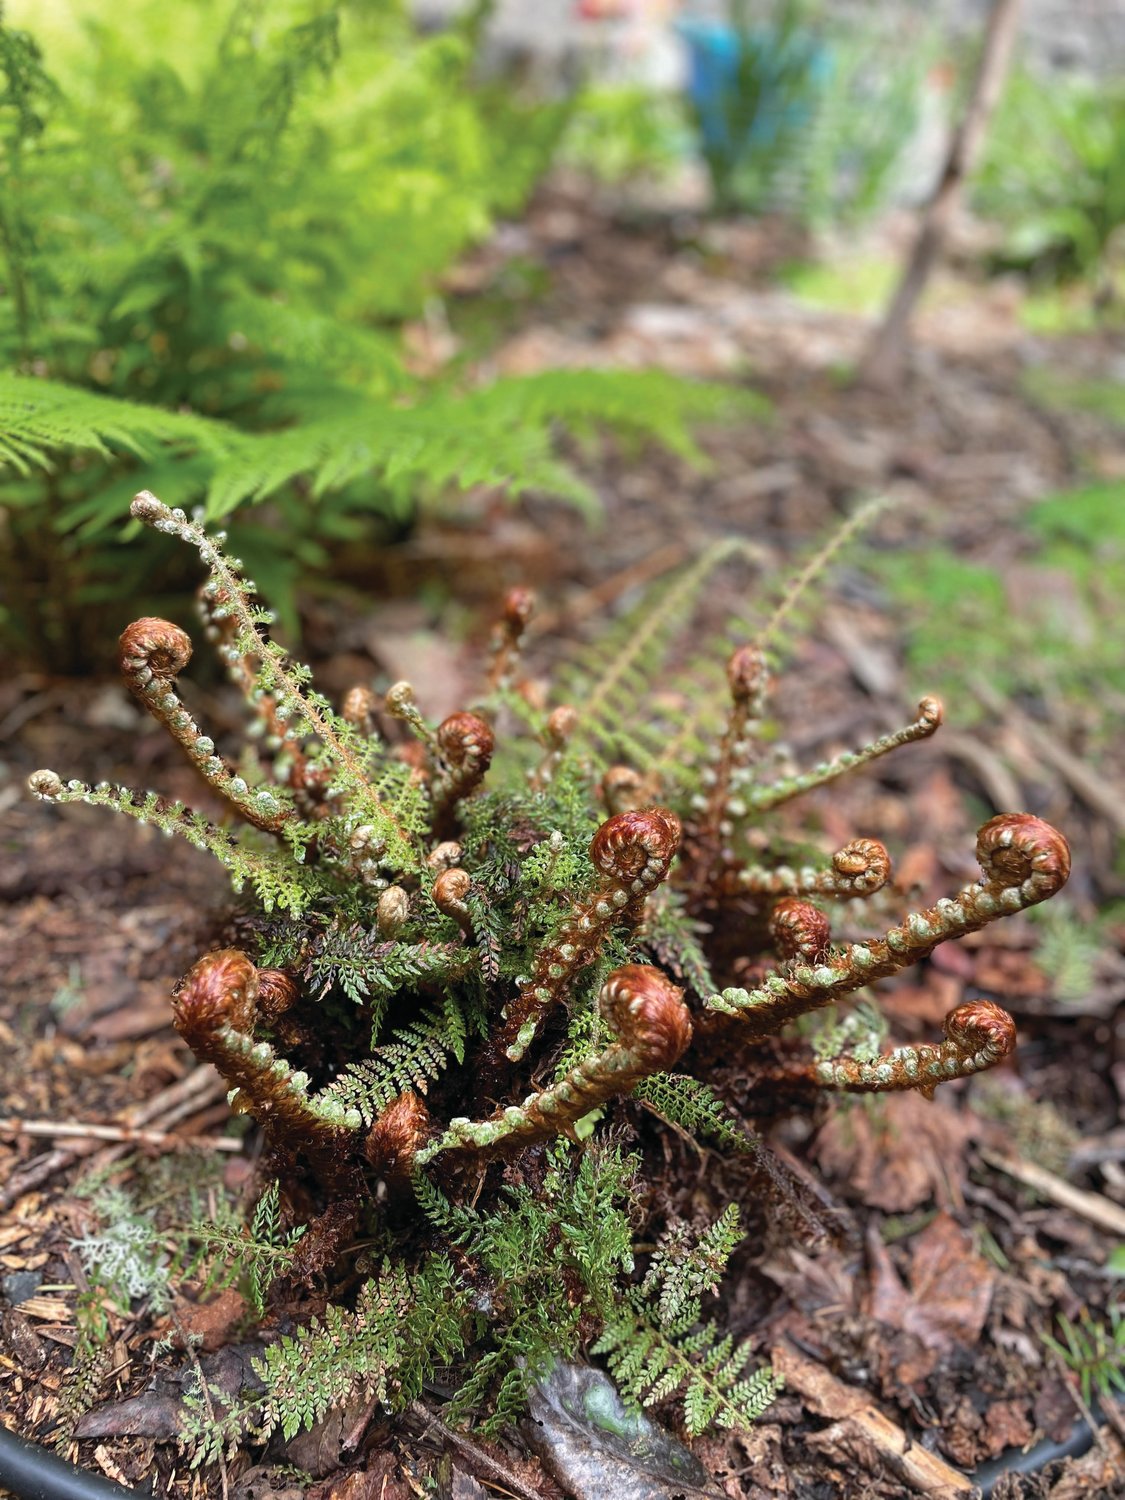 The unfurling crosiers, or fiddleheads, of a divided soft shield fern (Polystichum setiferum).  Sometimes known as Alaska fern, it is a European cultivar.